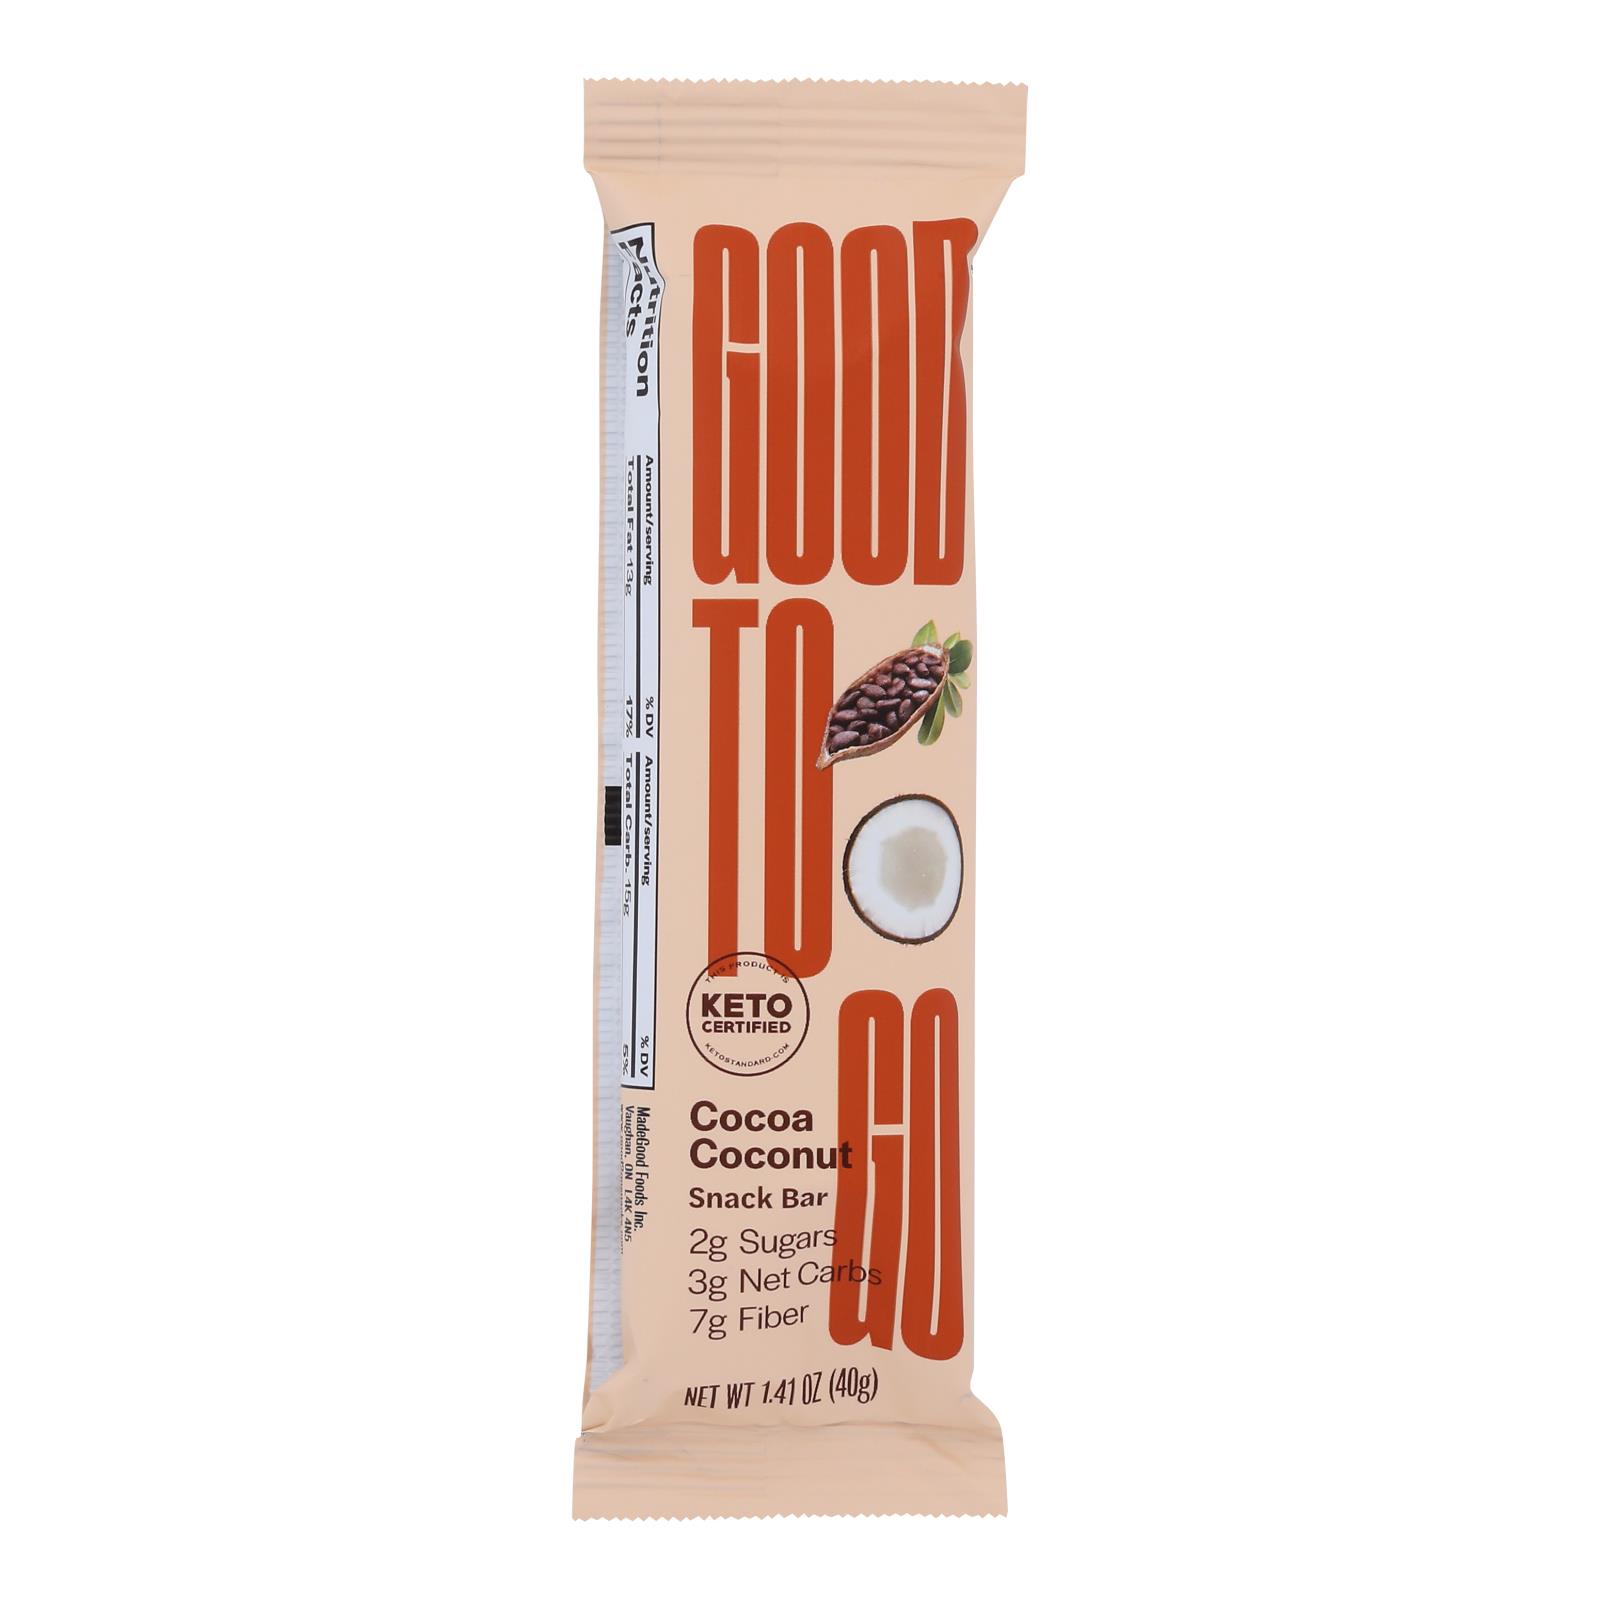 Good To Go - Keto Snack Bar Cocoa Cconut - 9개 묶음상품 - 1.41 OZ